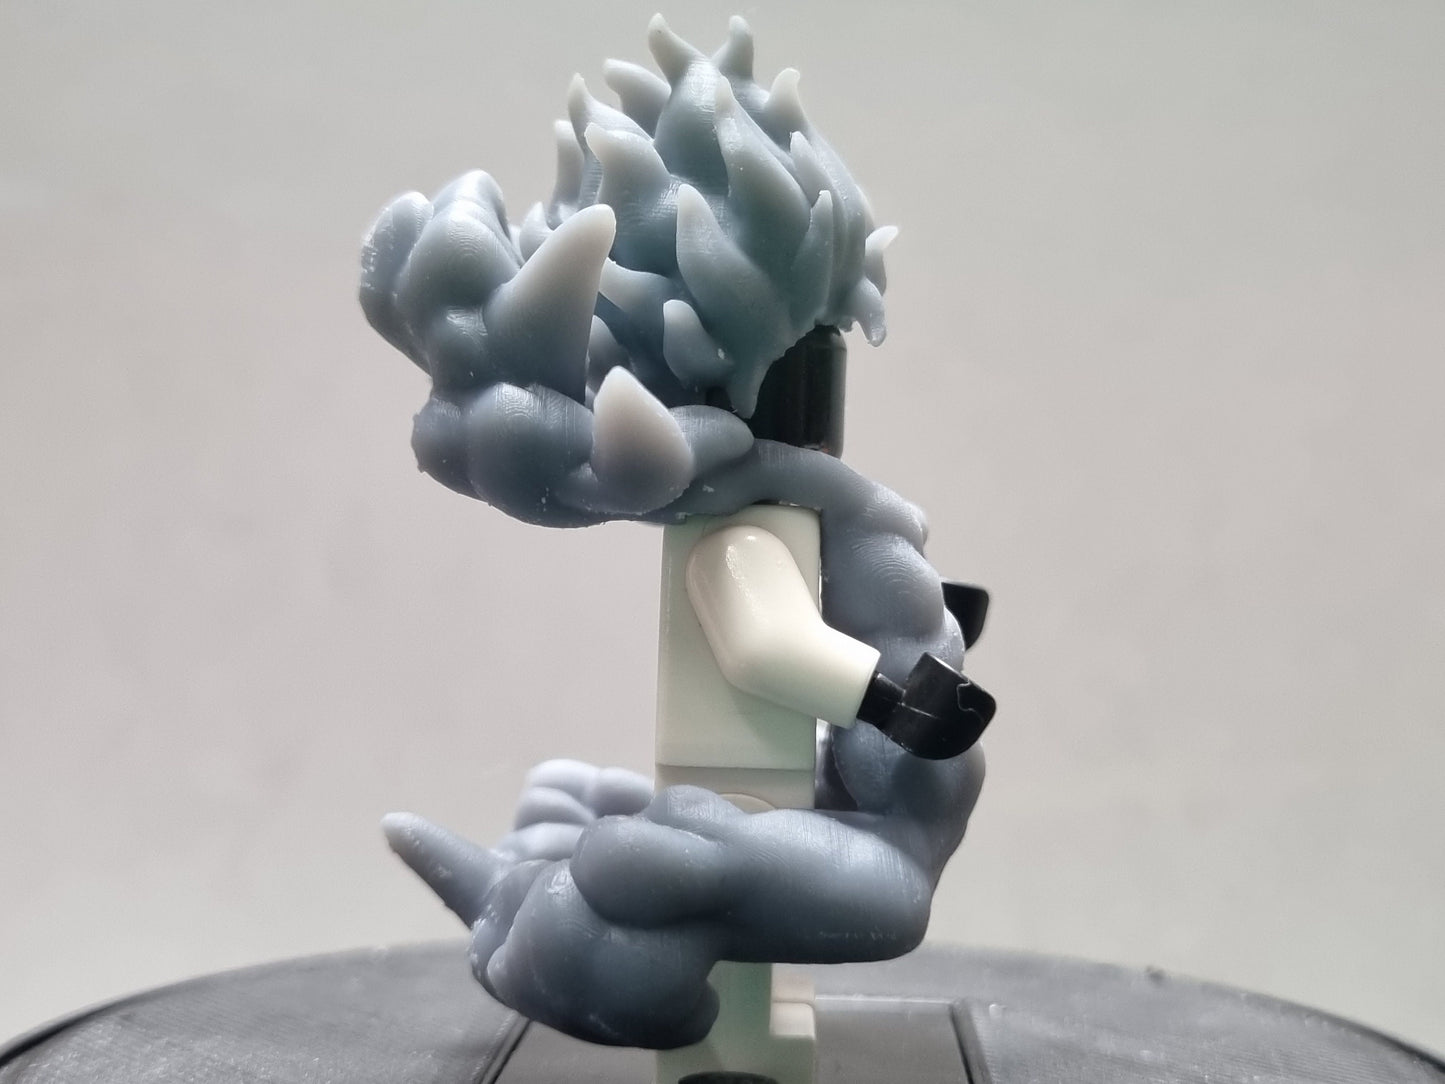 Building toy custom 3D printed cloud man